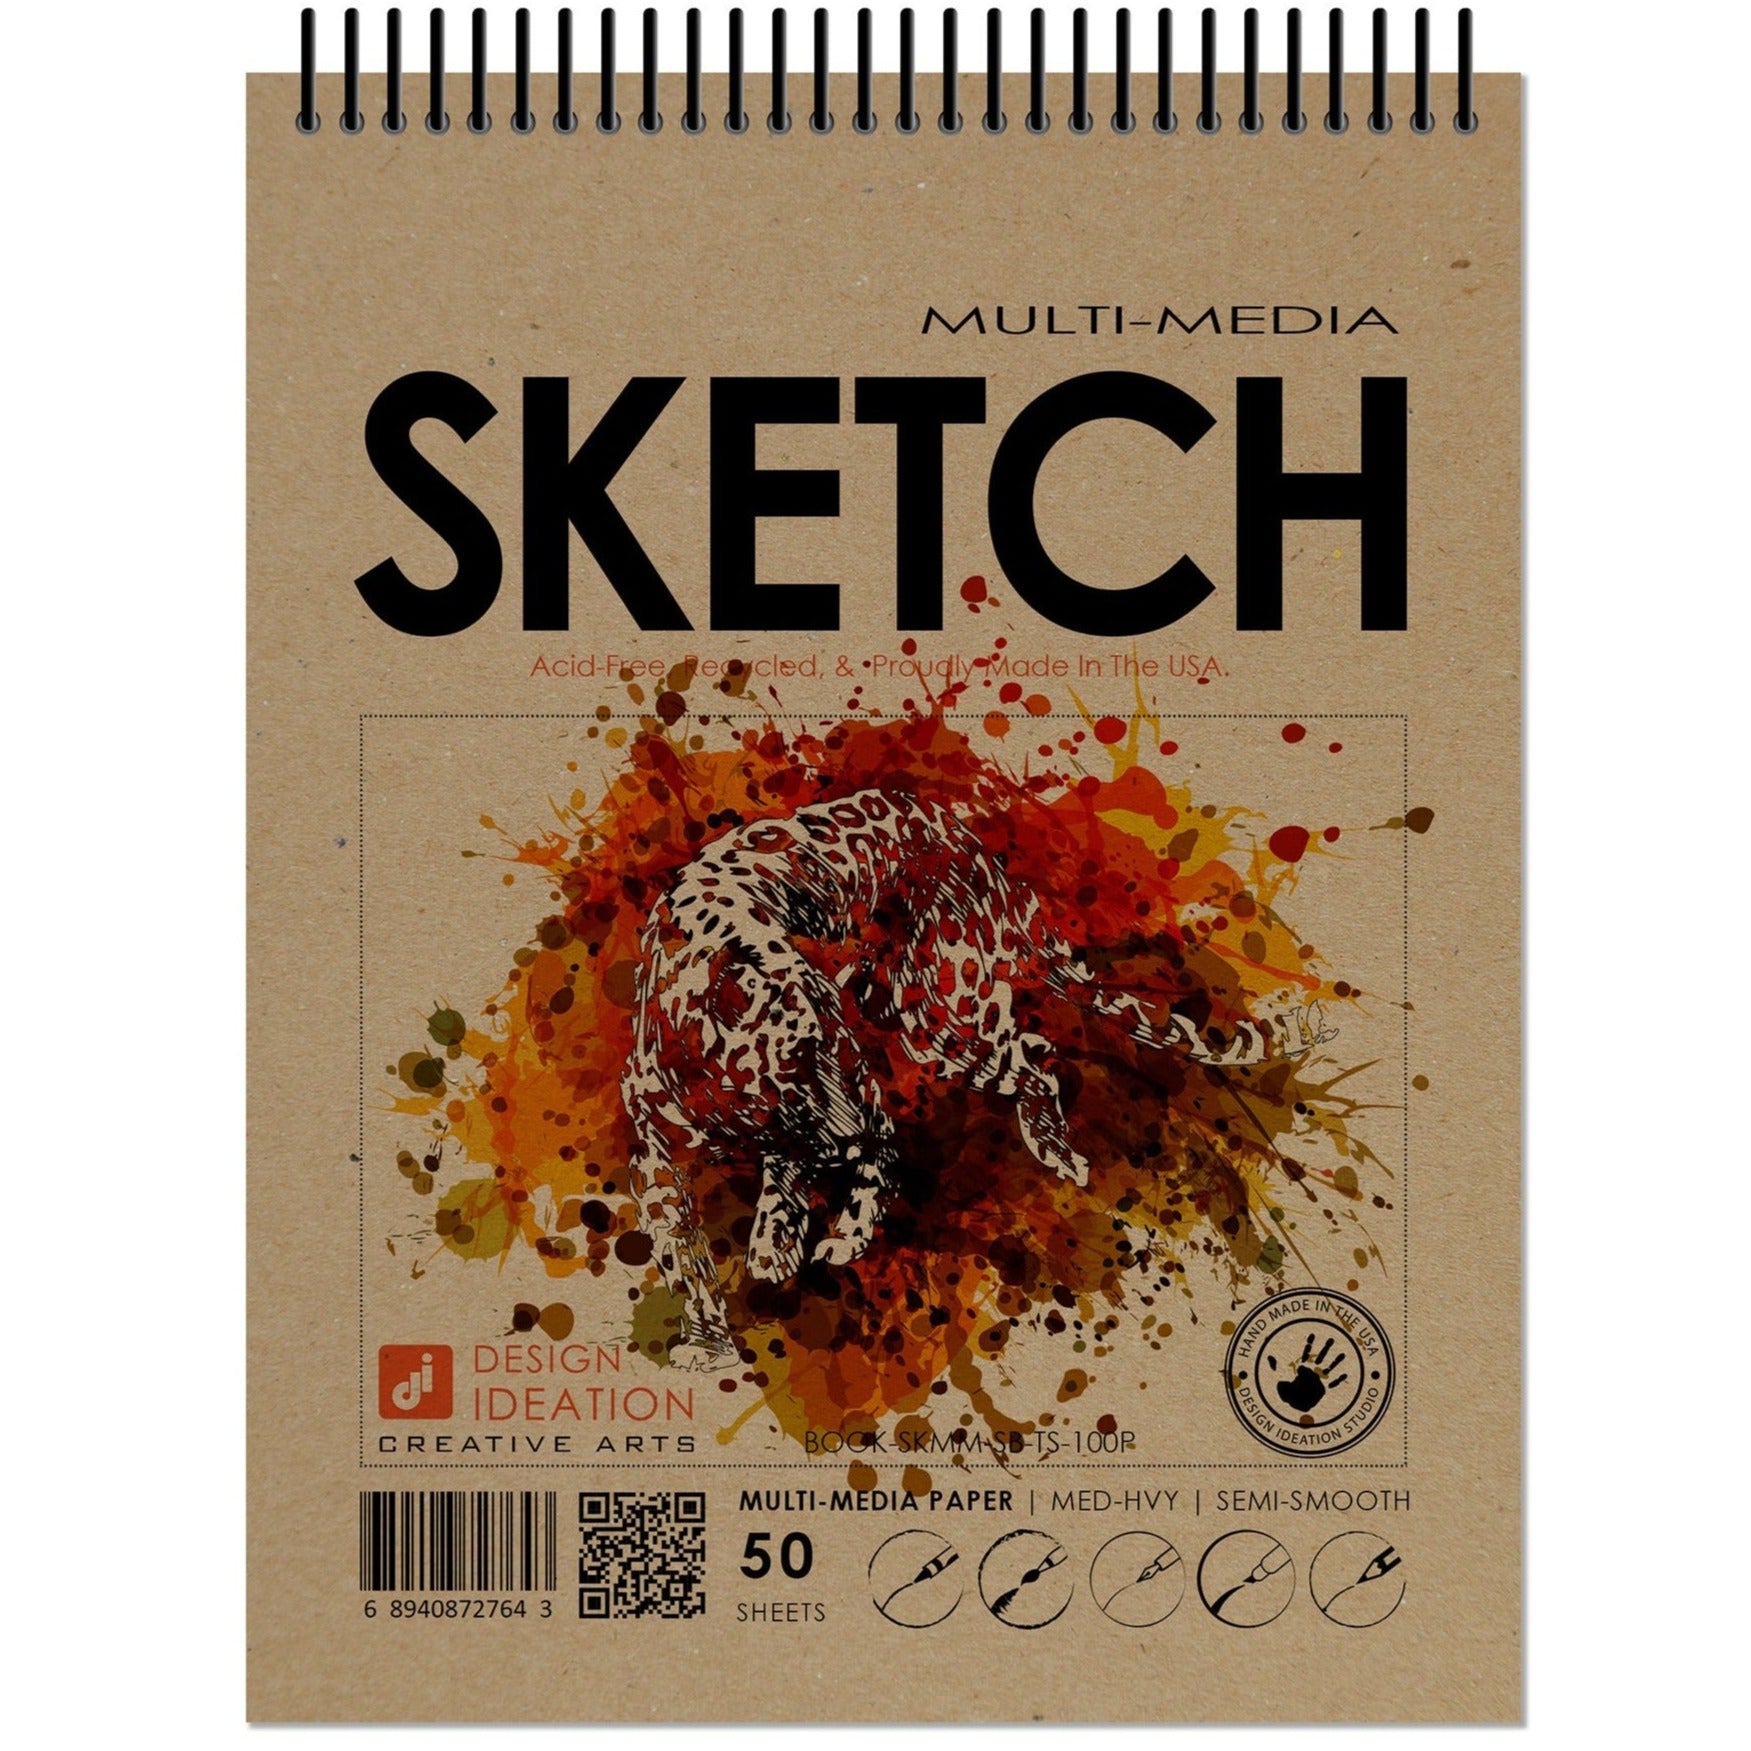 Sketch-O Sketch Drawing Book (Soft Cover) – 140GSM - Anupam Stationery